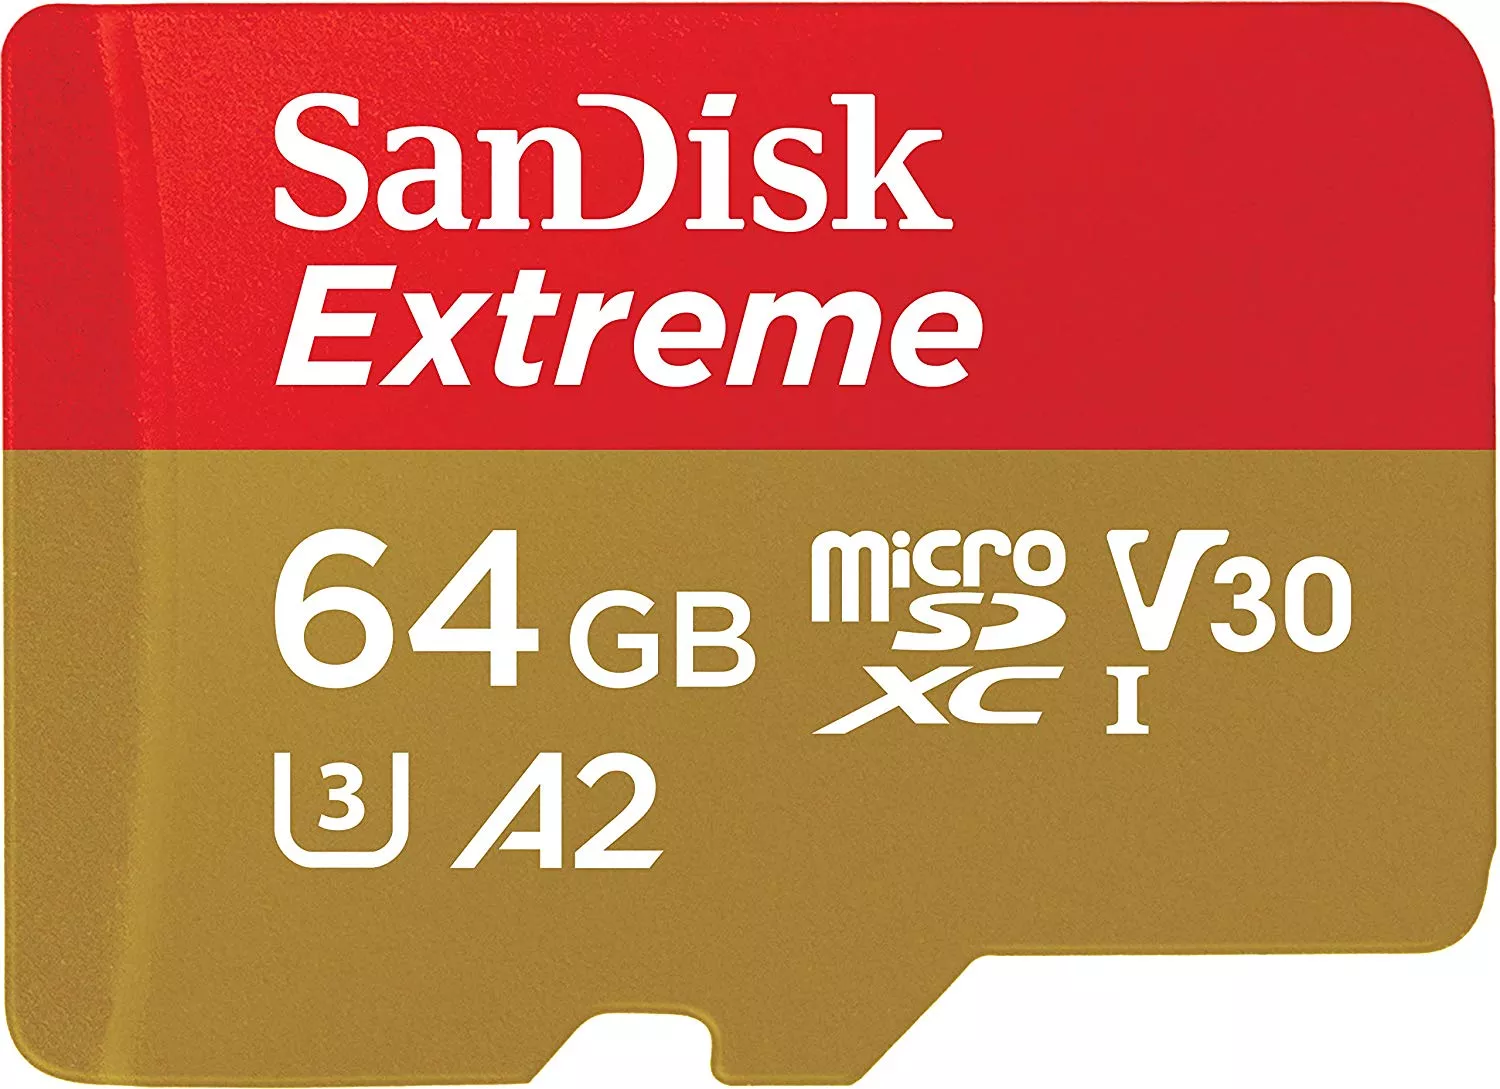 Sandisk SD Extreme